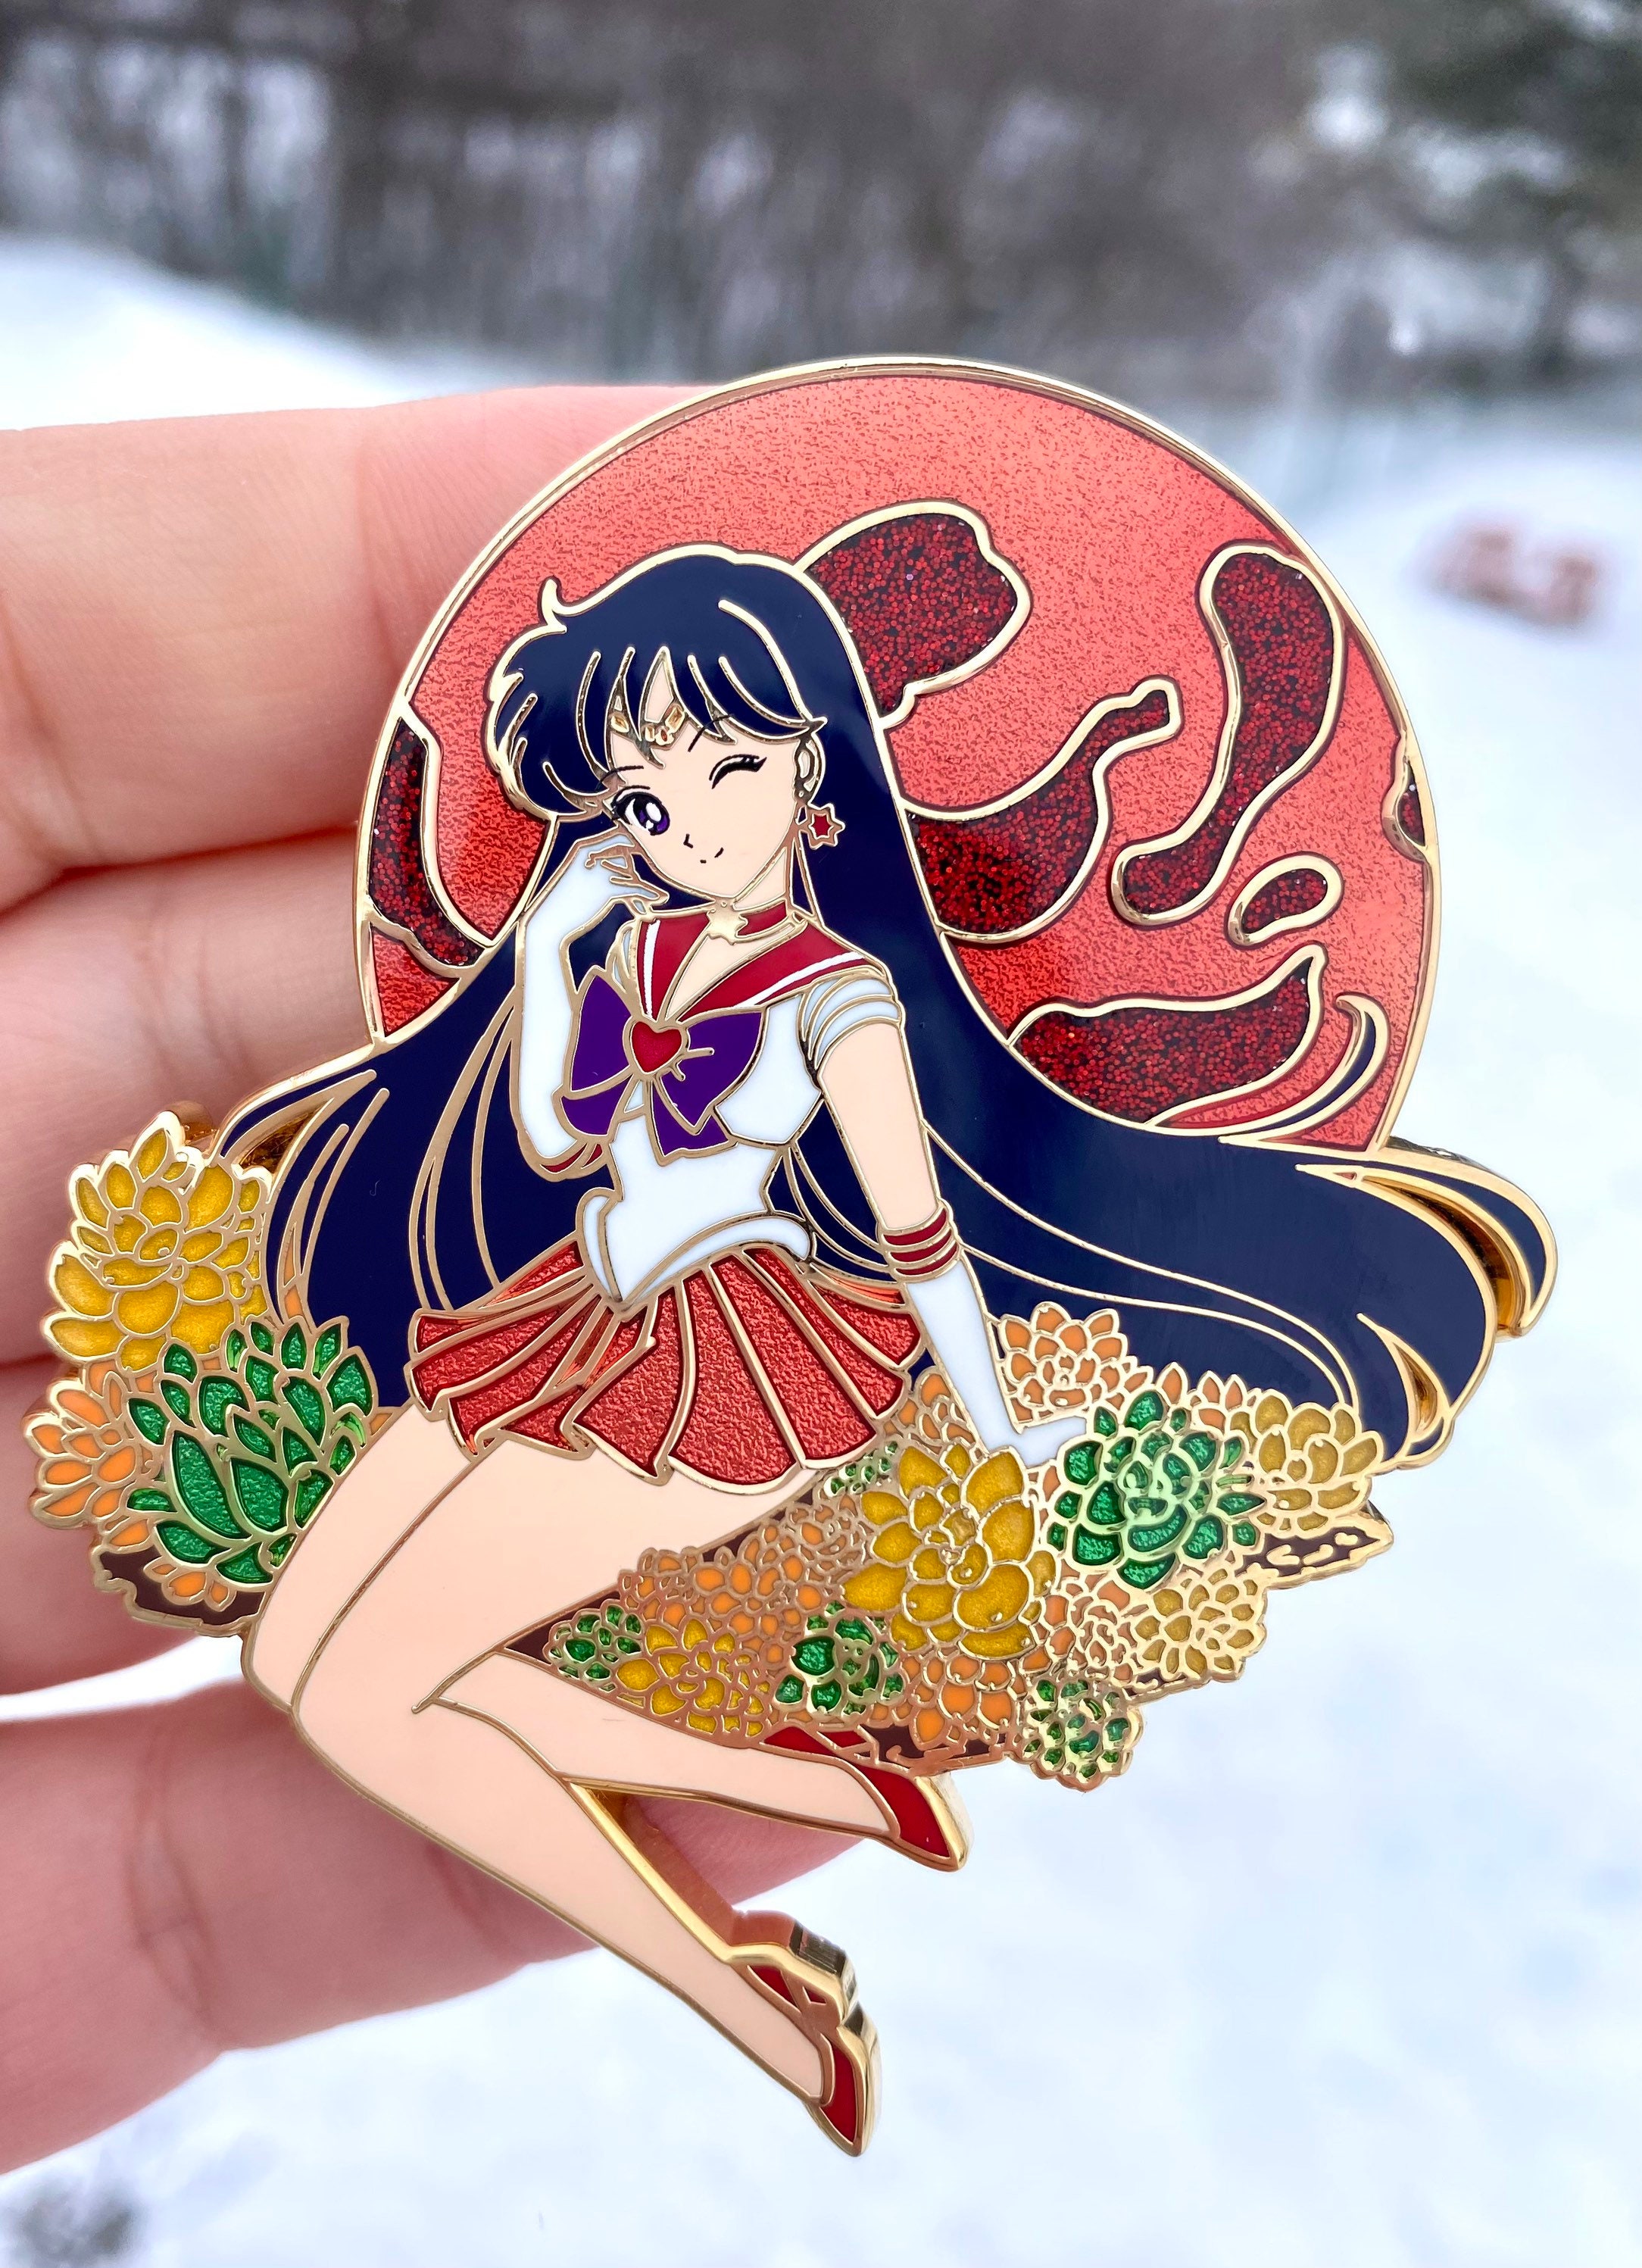 Enamel Pin Collection Series Part 2: Sailor Moon Pins